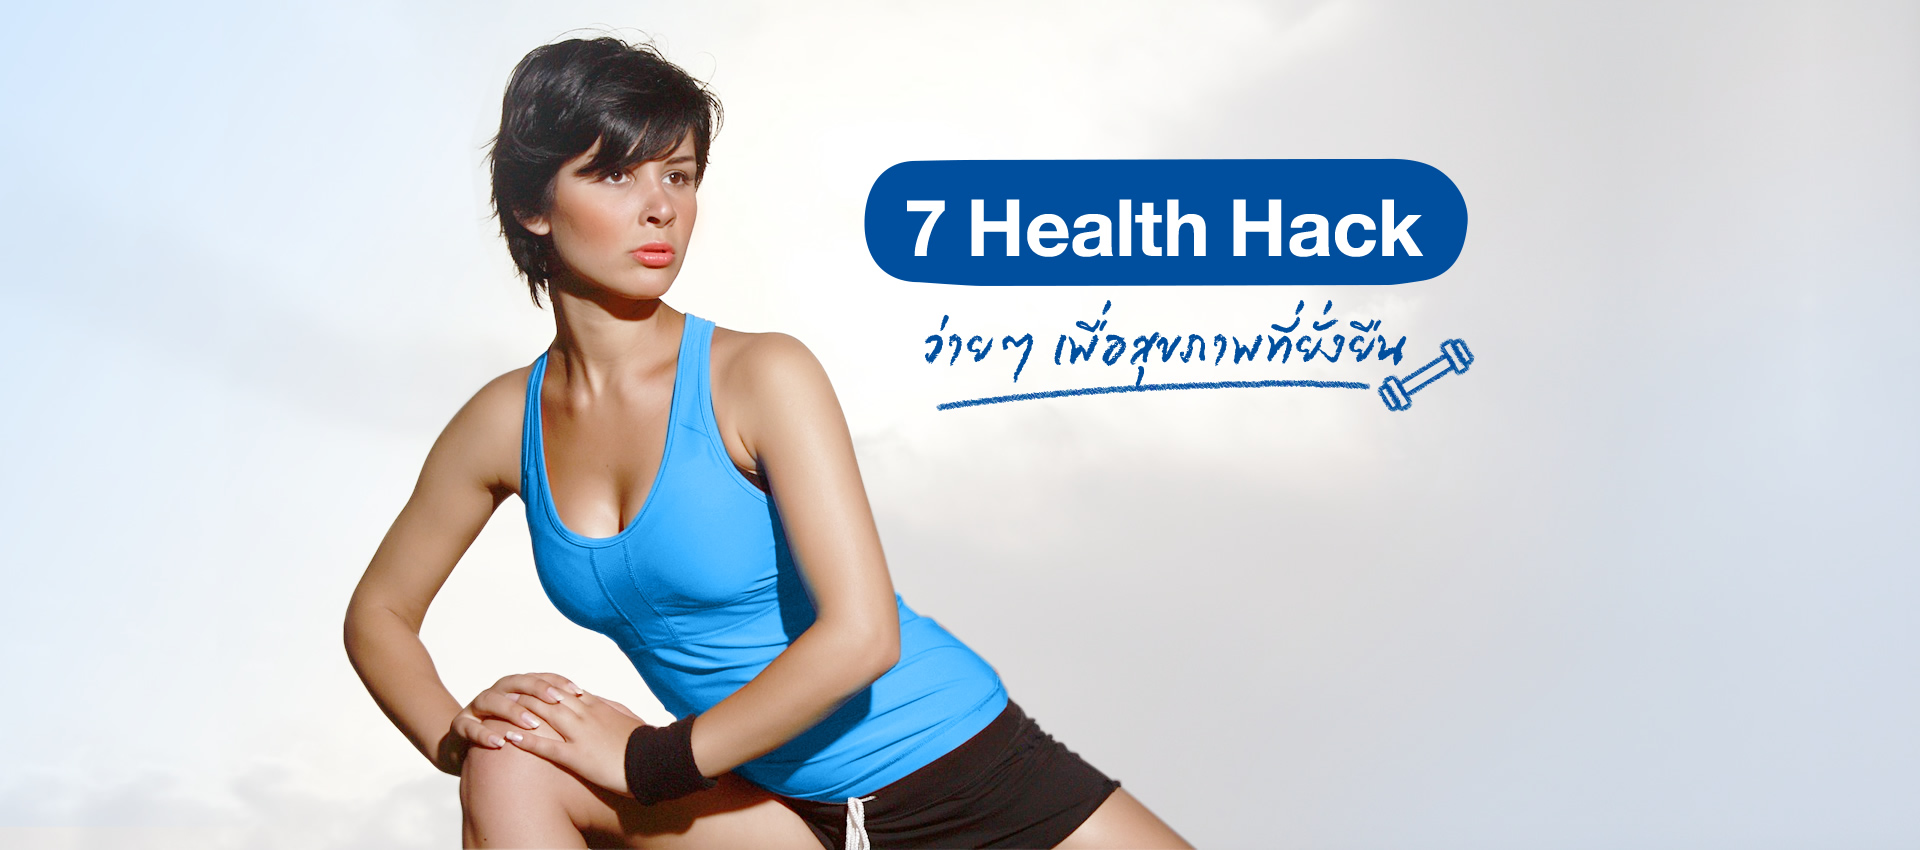 7 Health Hack ง่ายๆ เพื่อสุขภาพที่ยั่งยืน